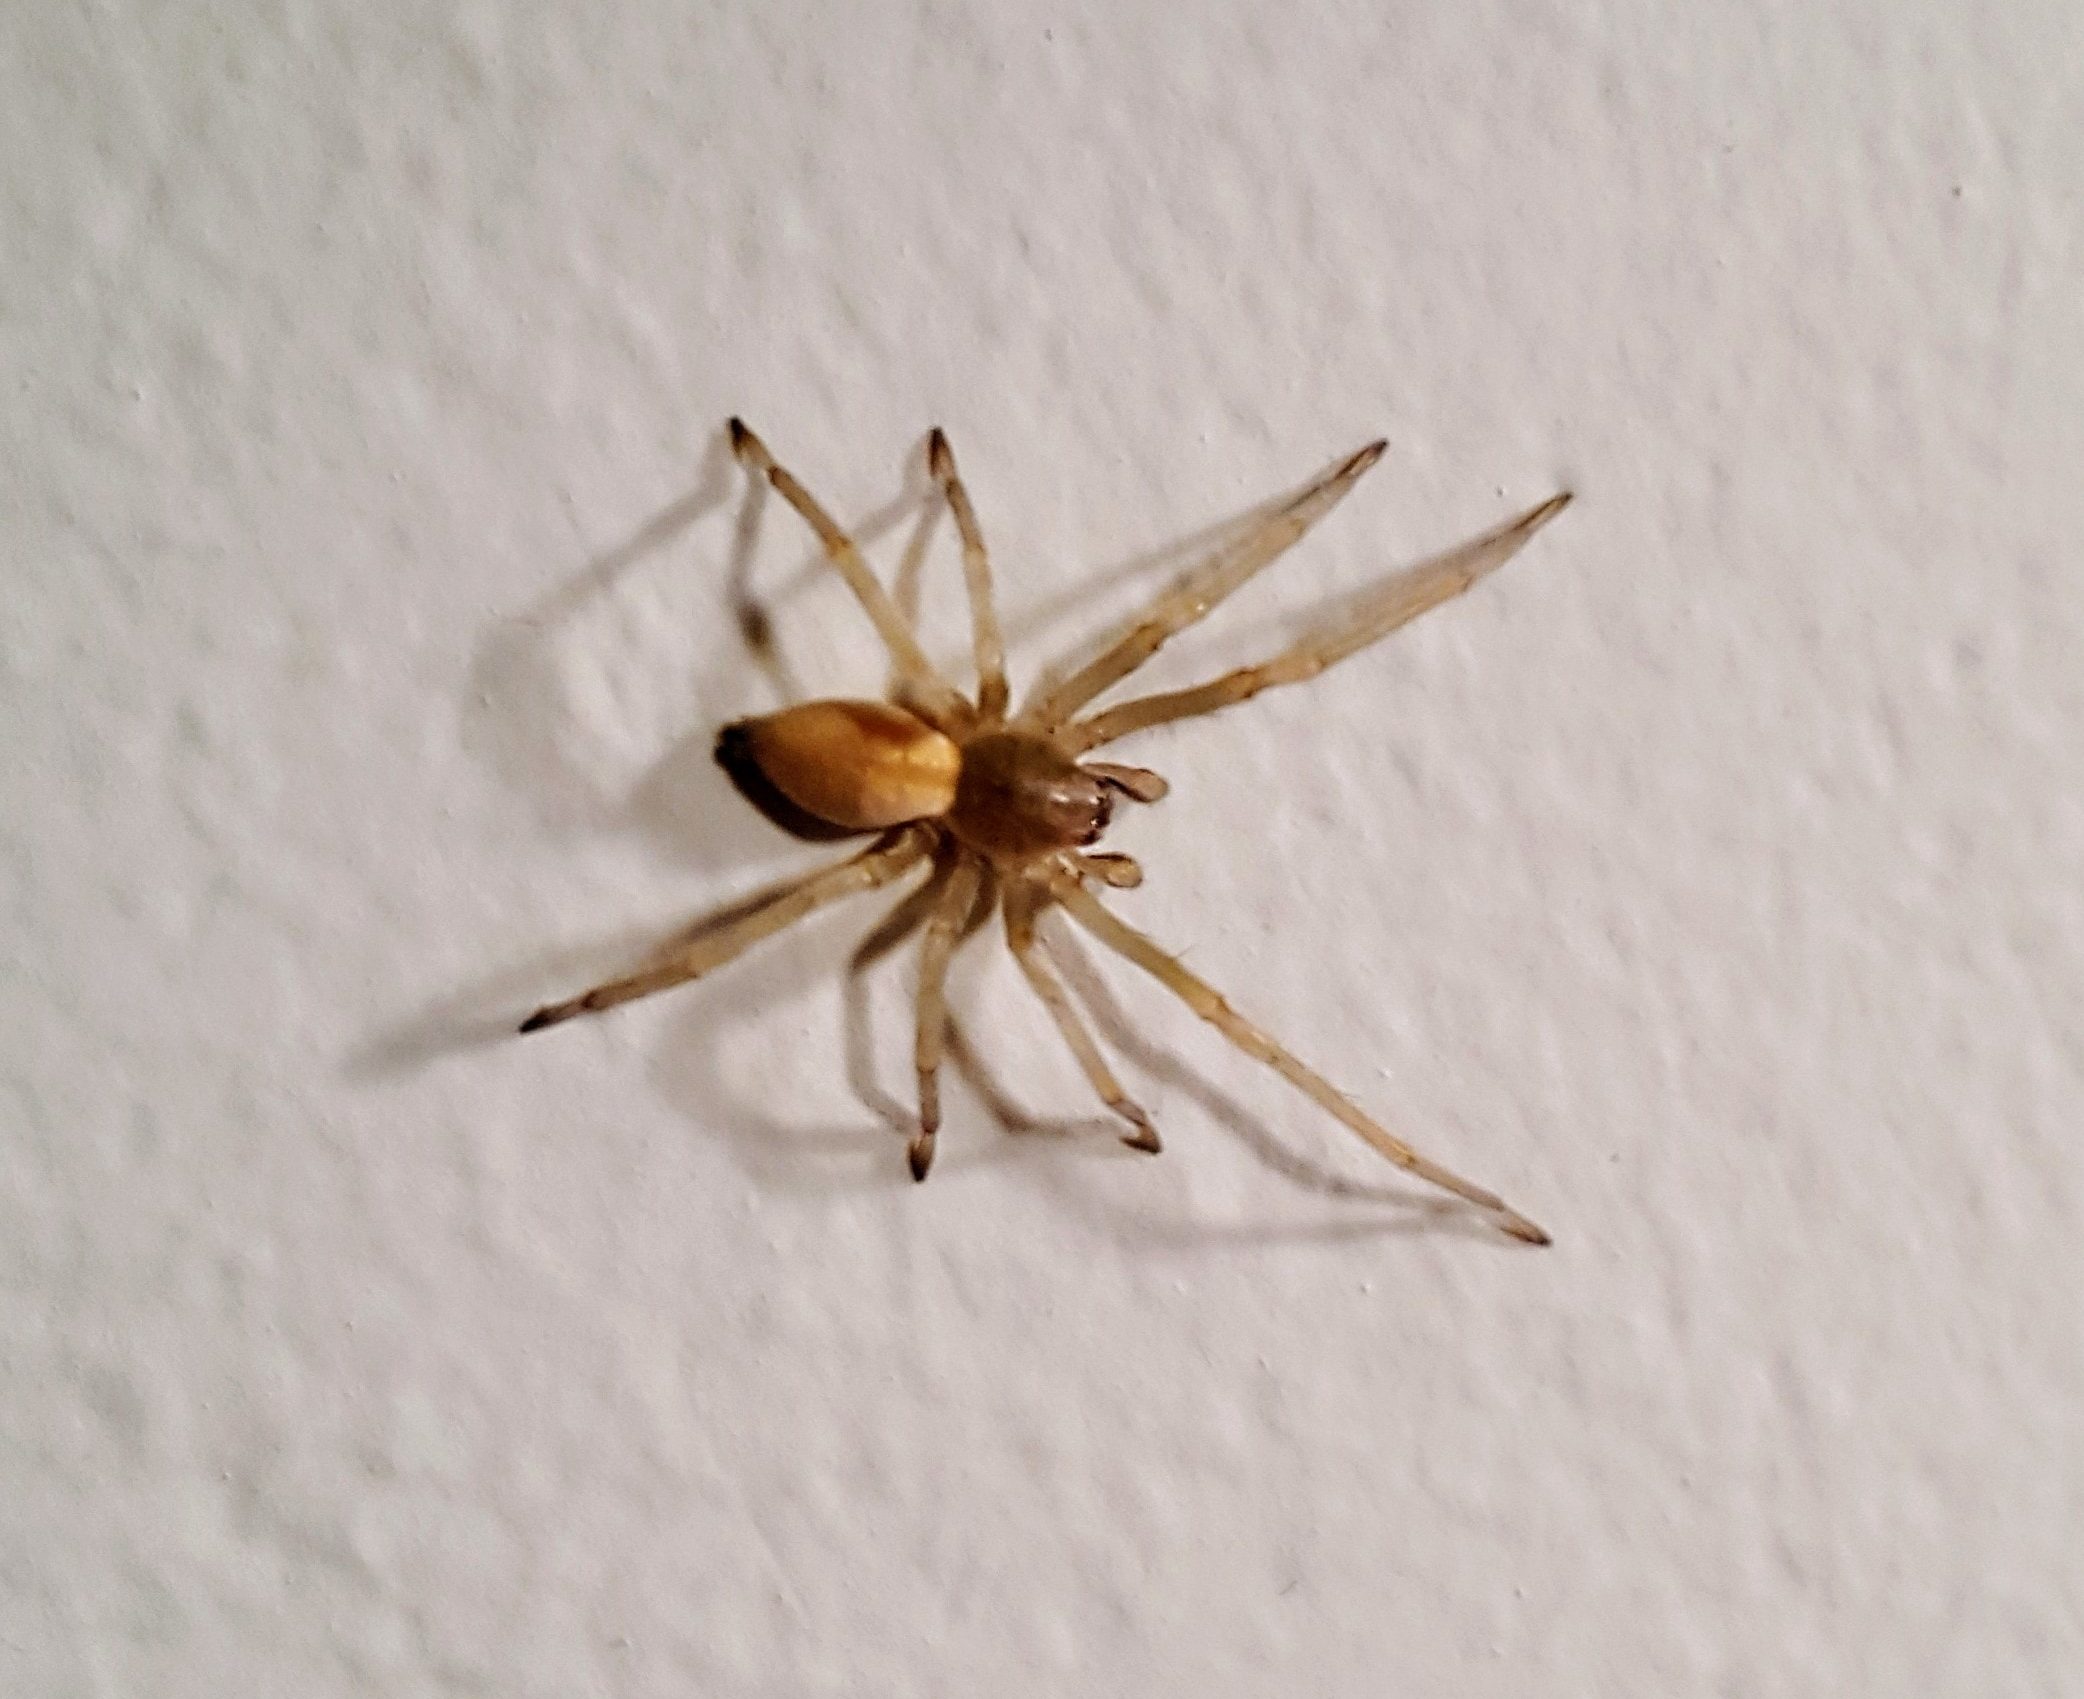 Picture of Cheiracanthium mildei (Long-legged Sac Spider) - Dorsal